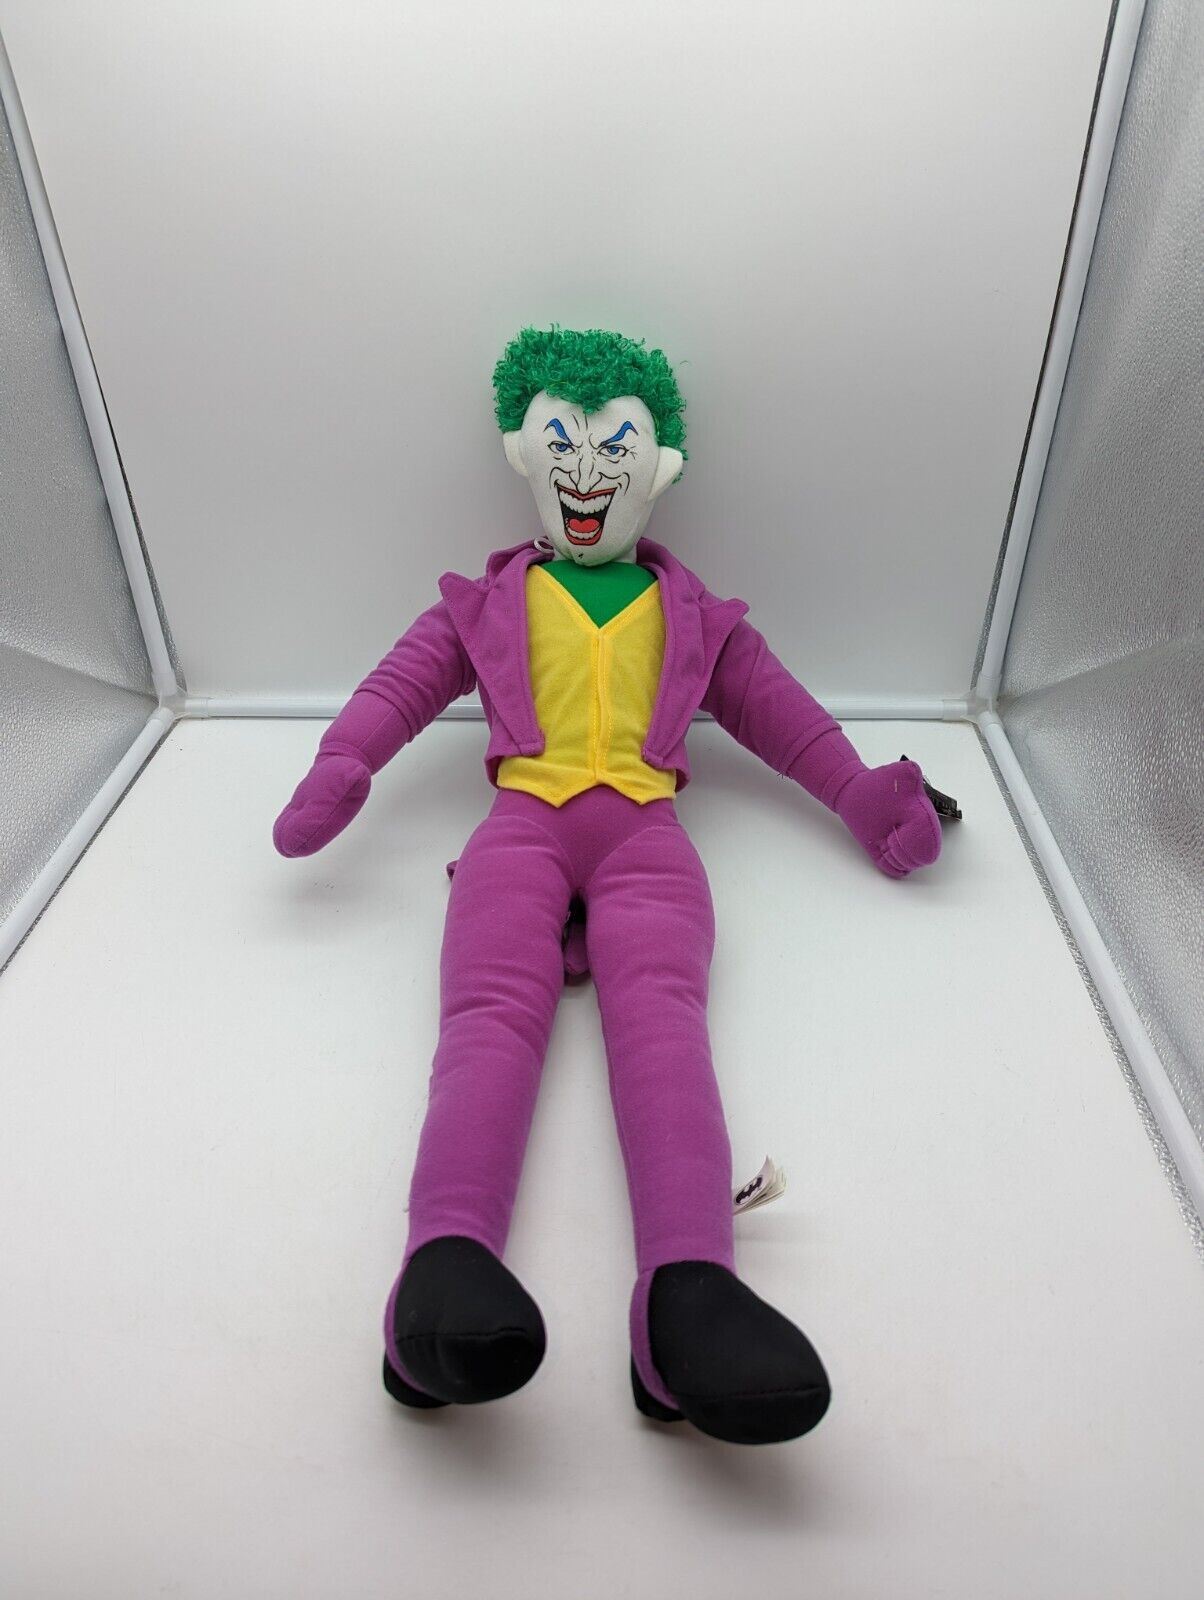 Toy Factory/Warner Bros Batman's Plush Large Joker Villain 17.5 Inches